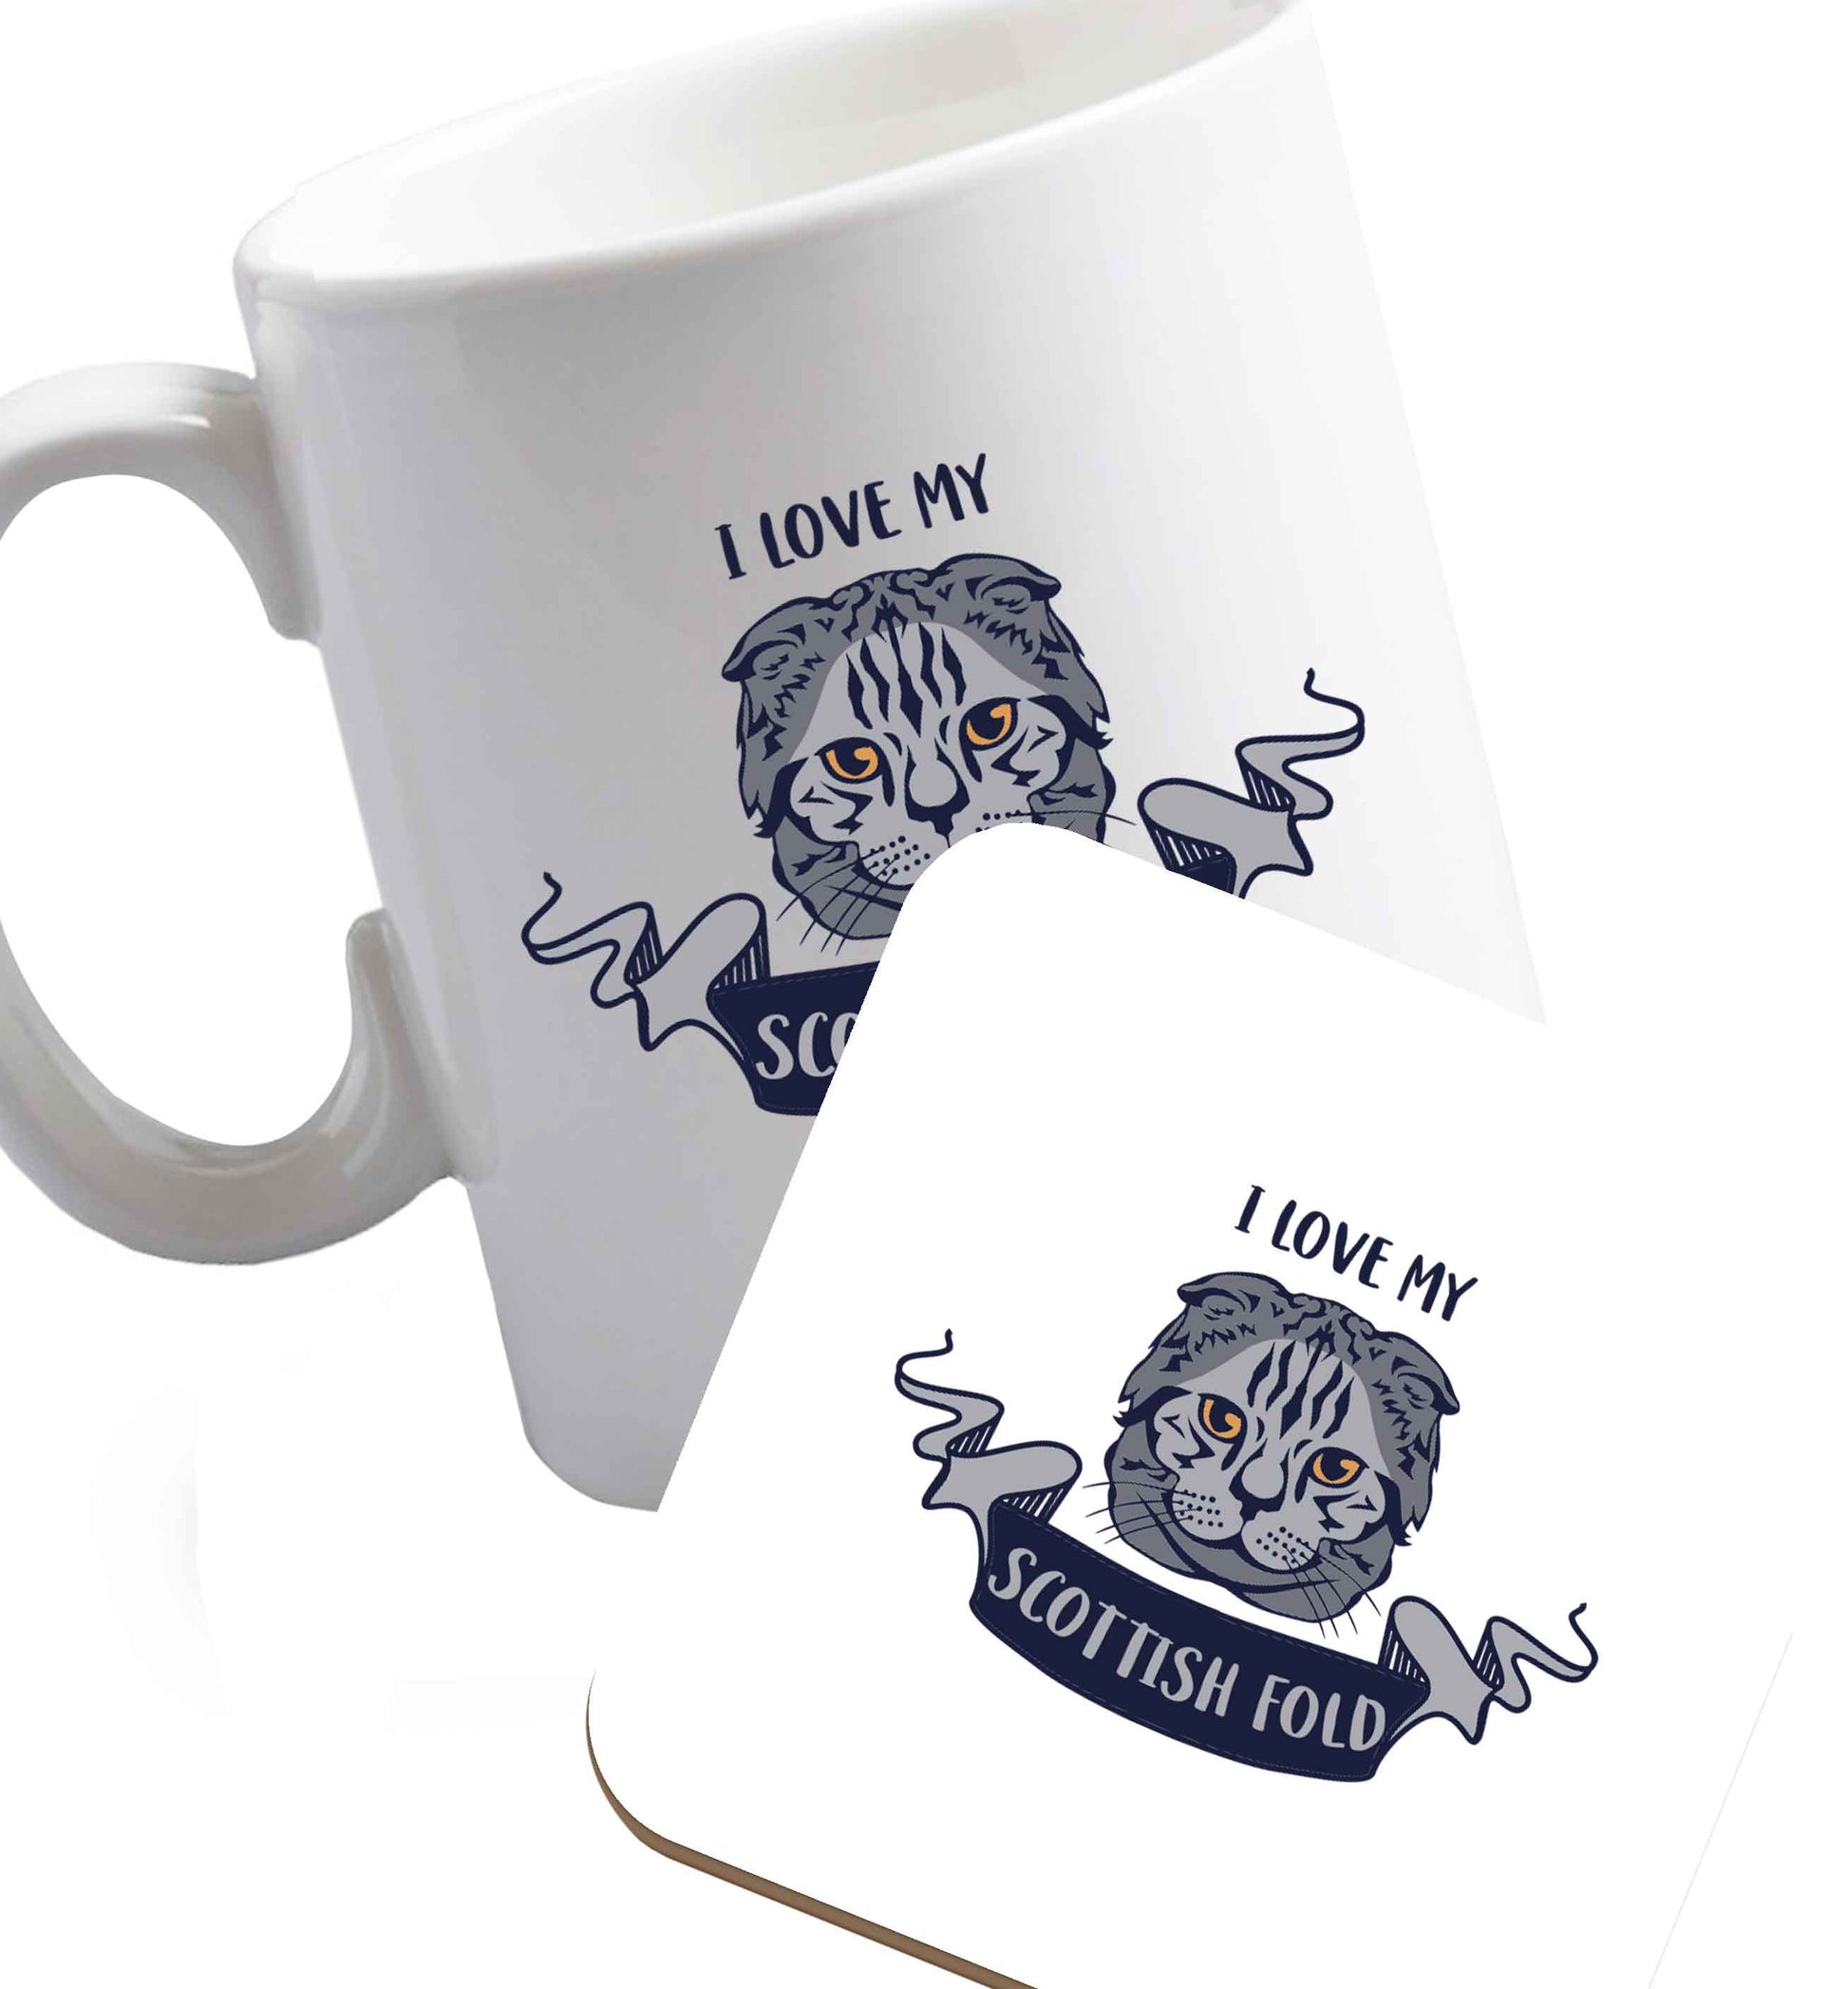 10 oz I love my scottish fold cat ceramic mug and coaster set right handed